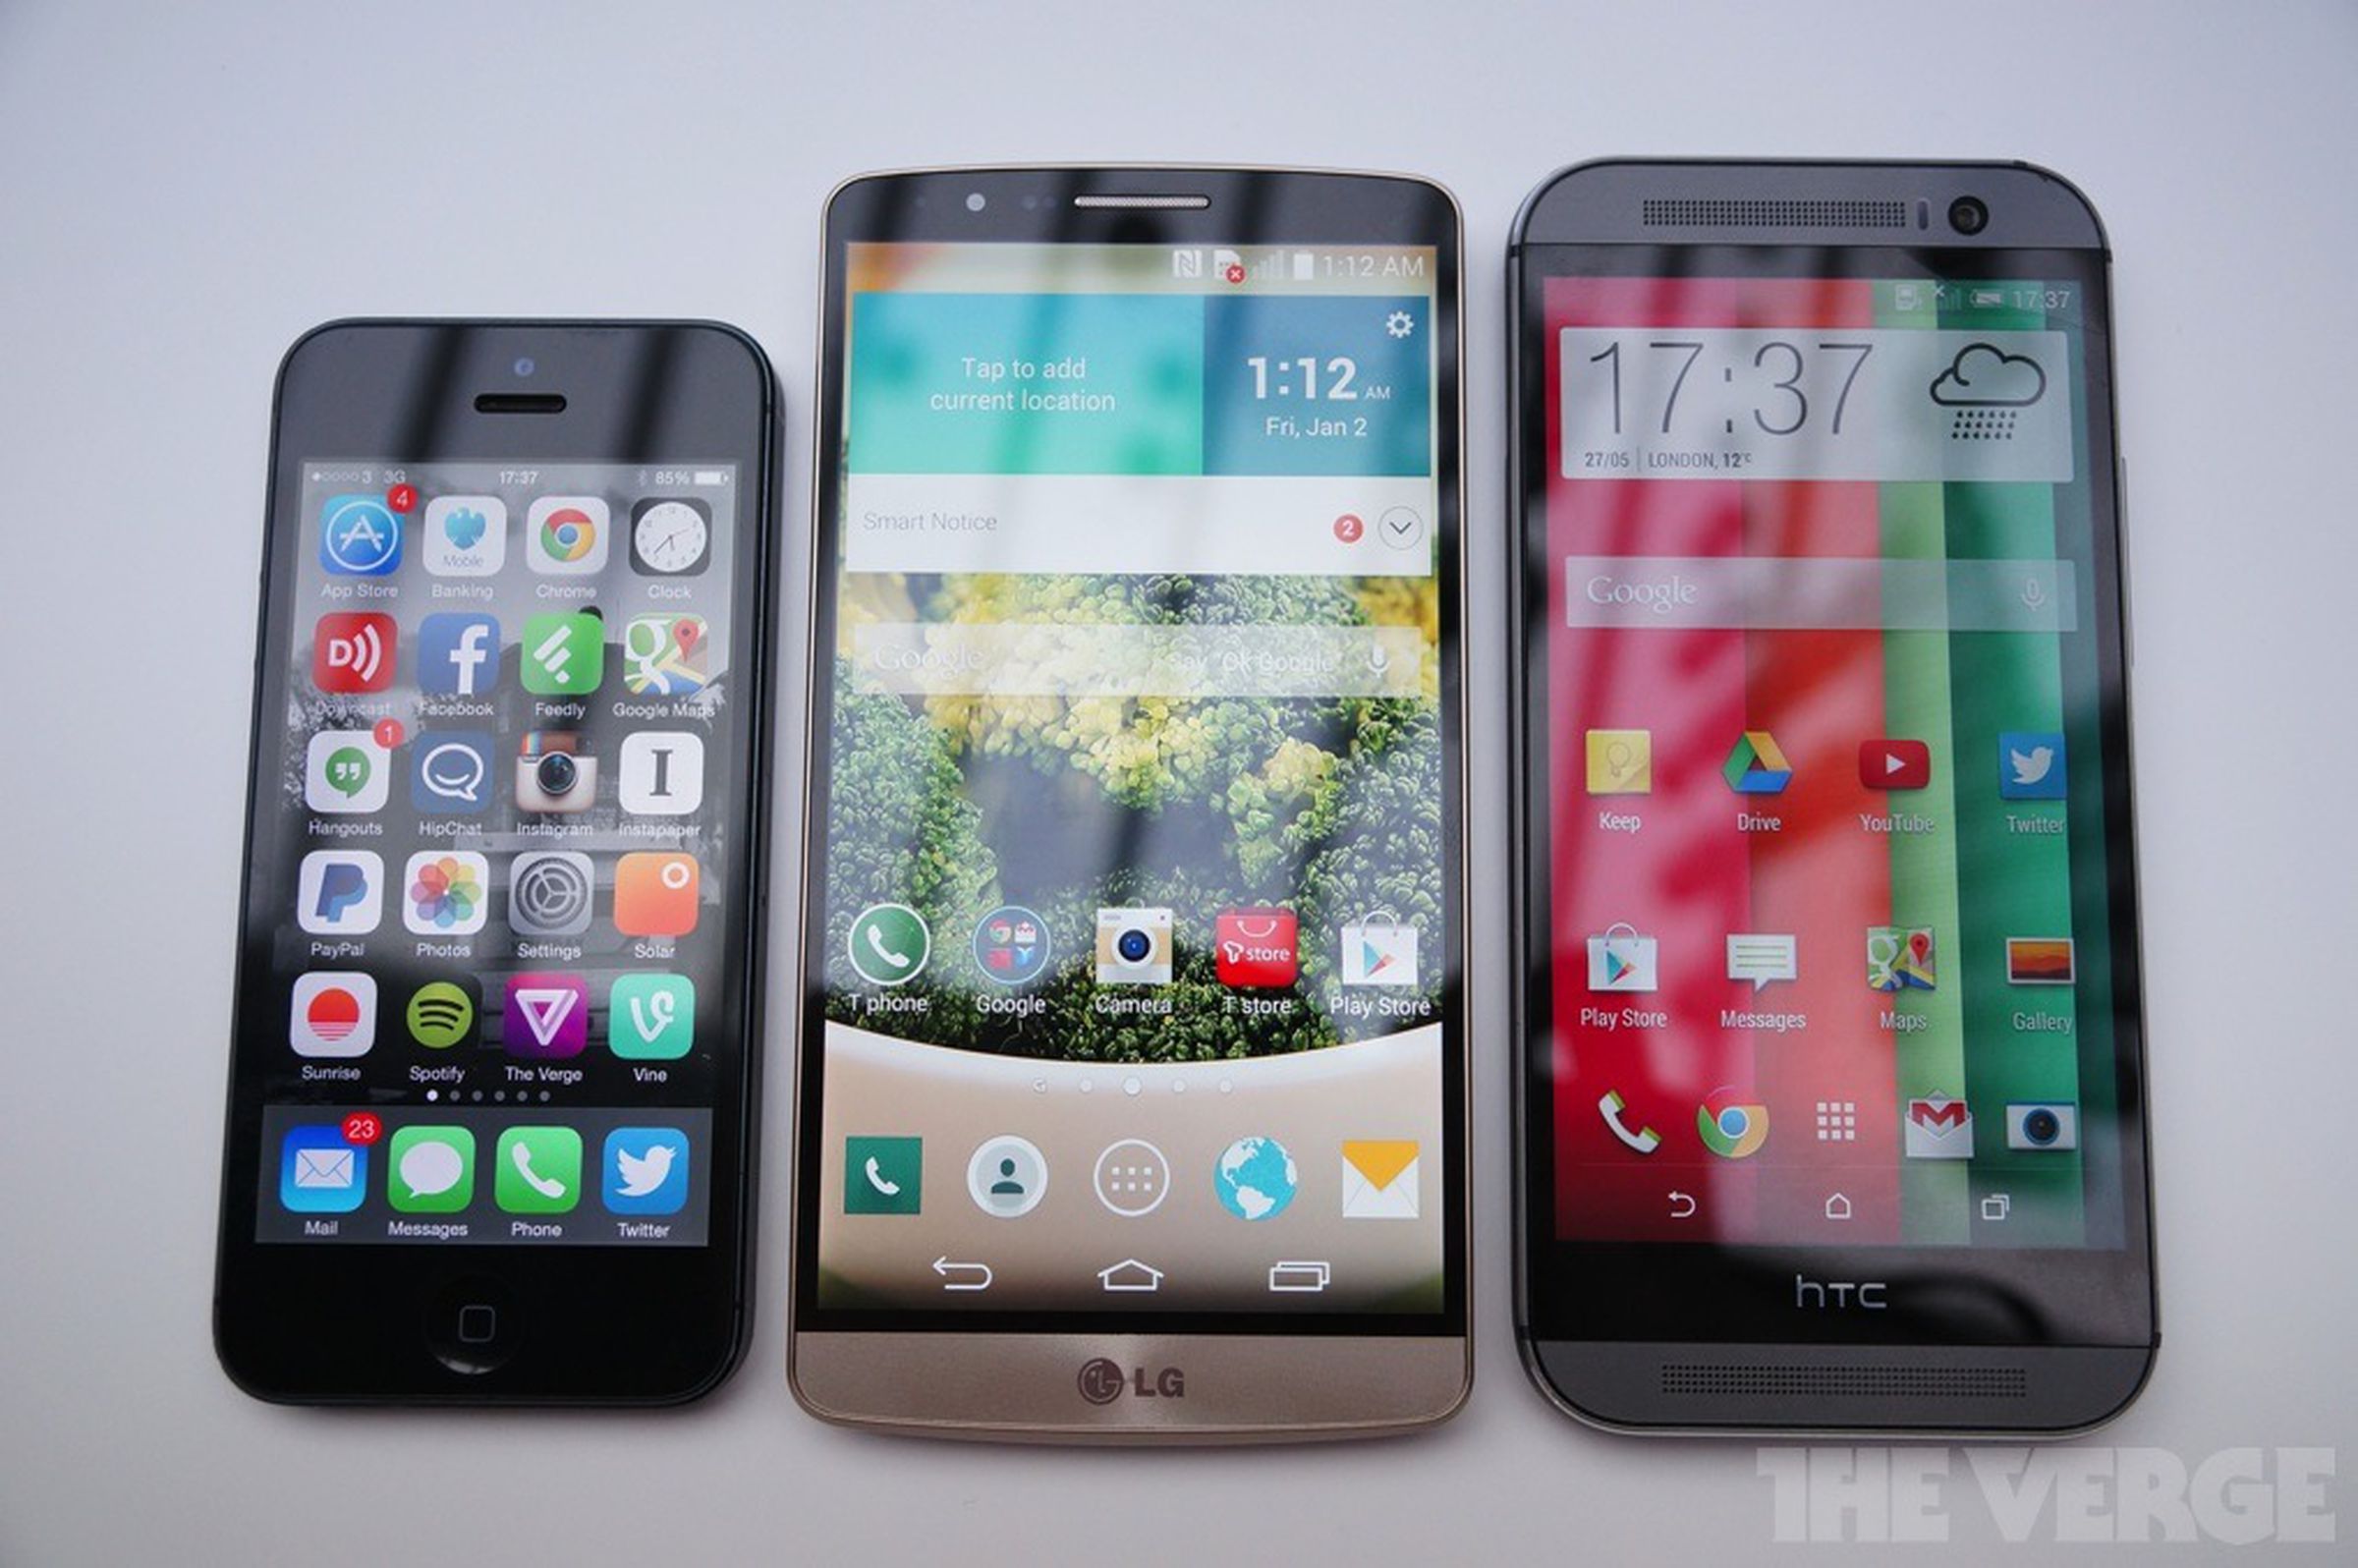 LG G3 hands-on photos